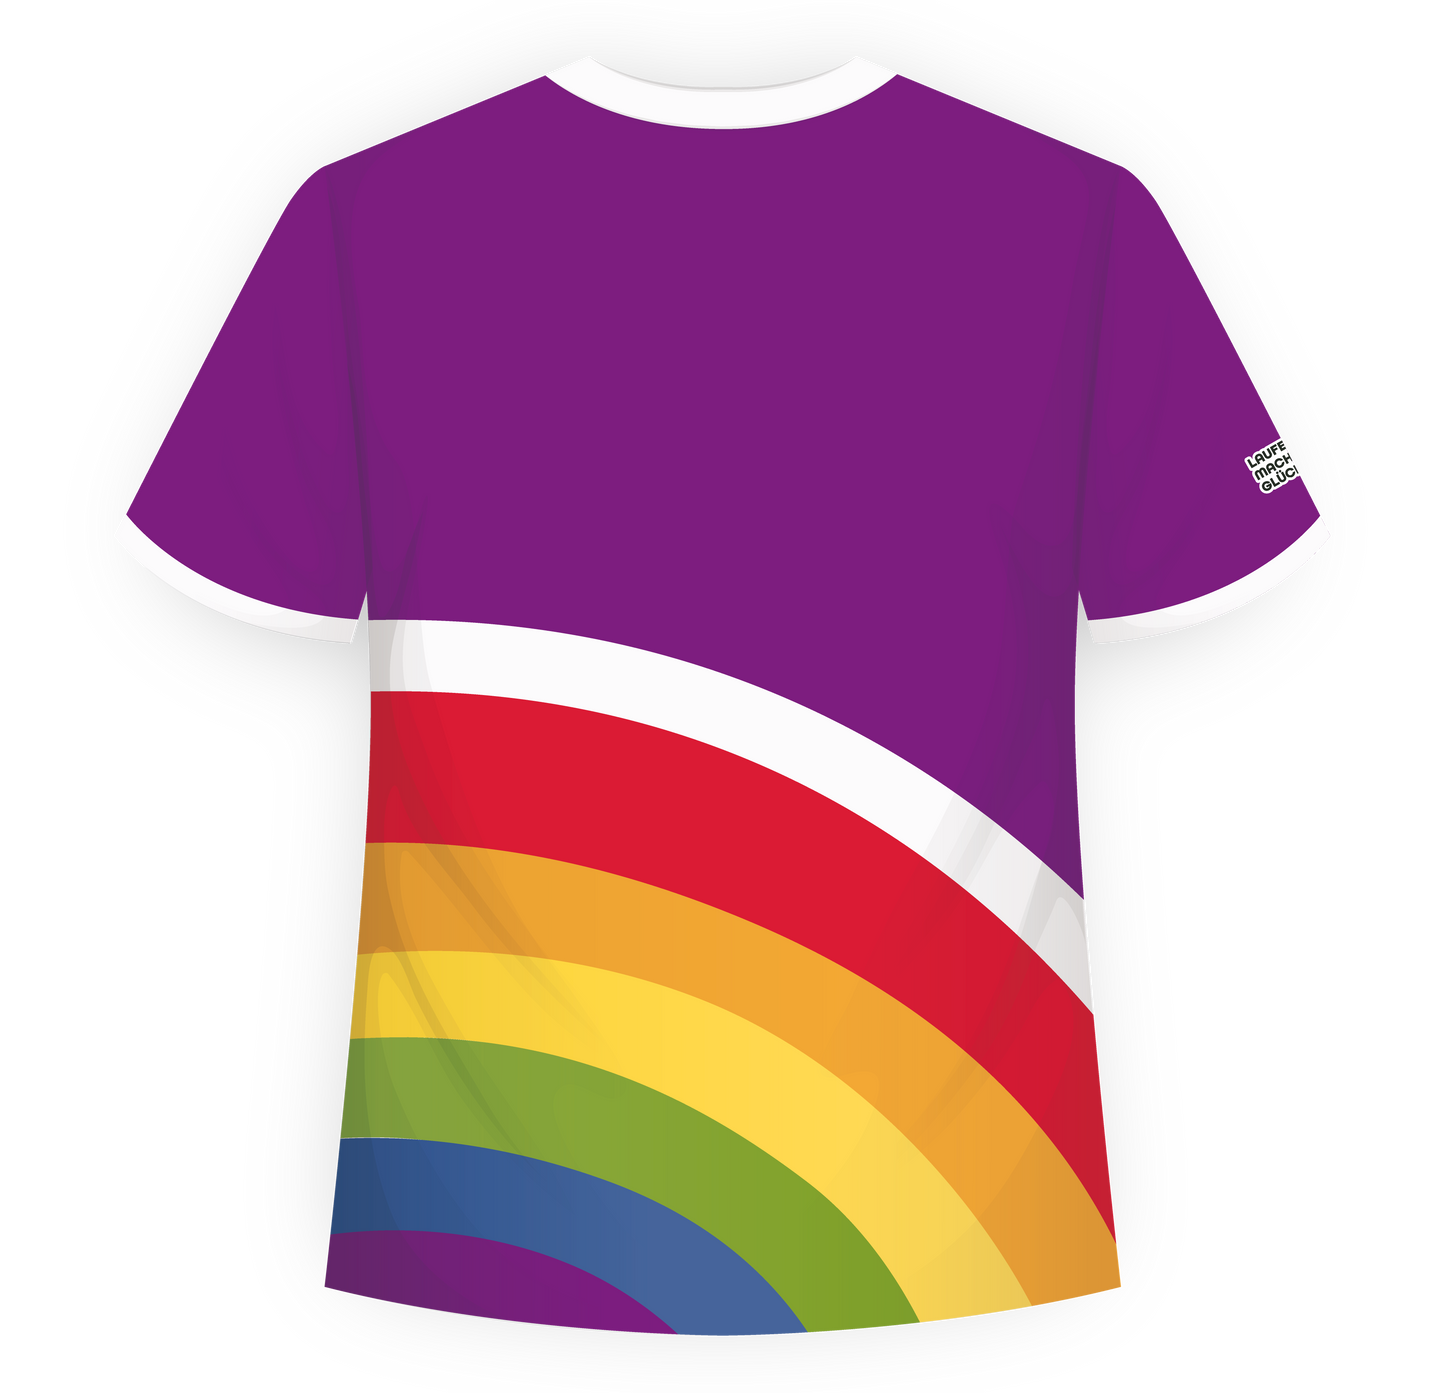 Shirt "Rainbow Run" (2022)